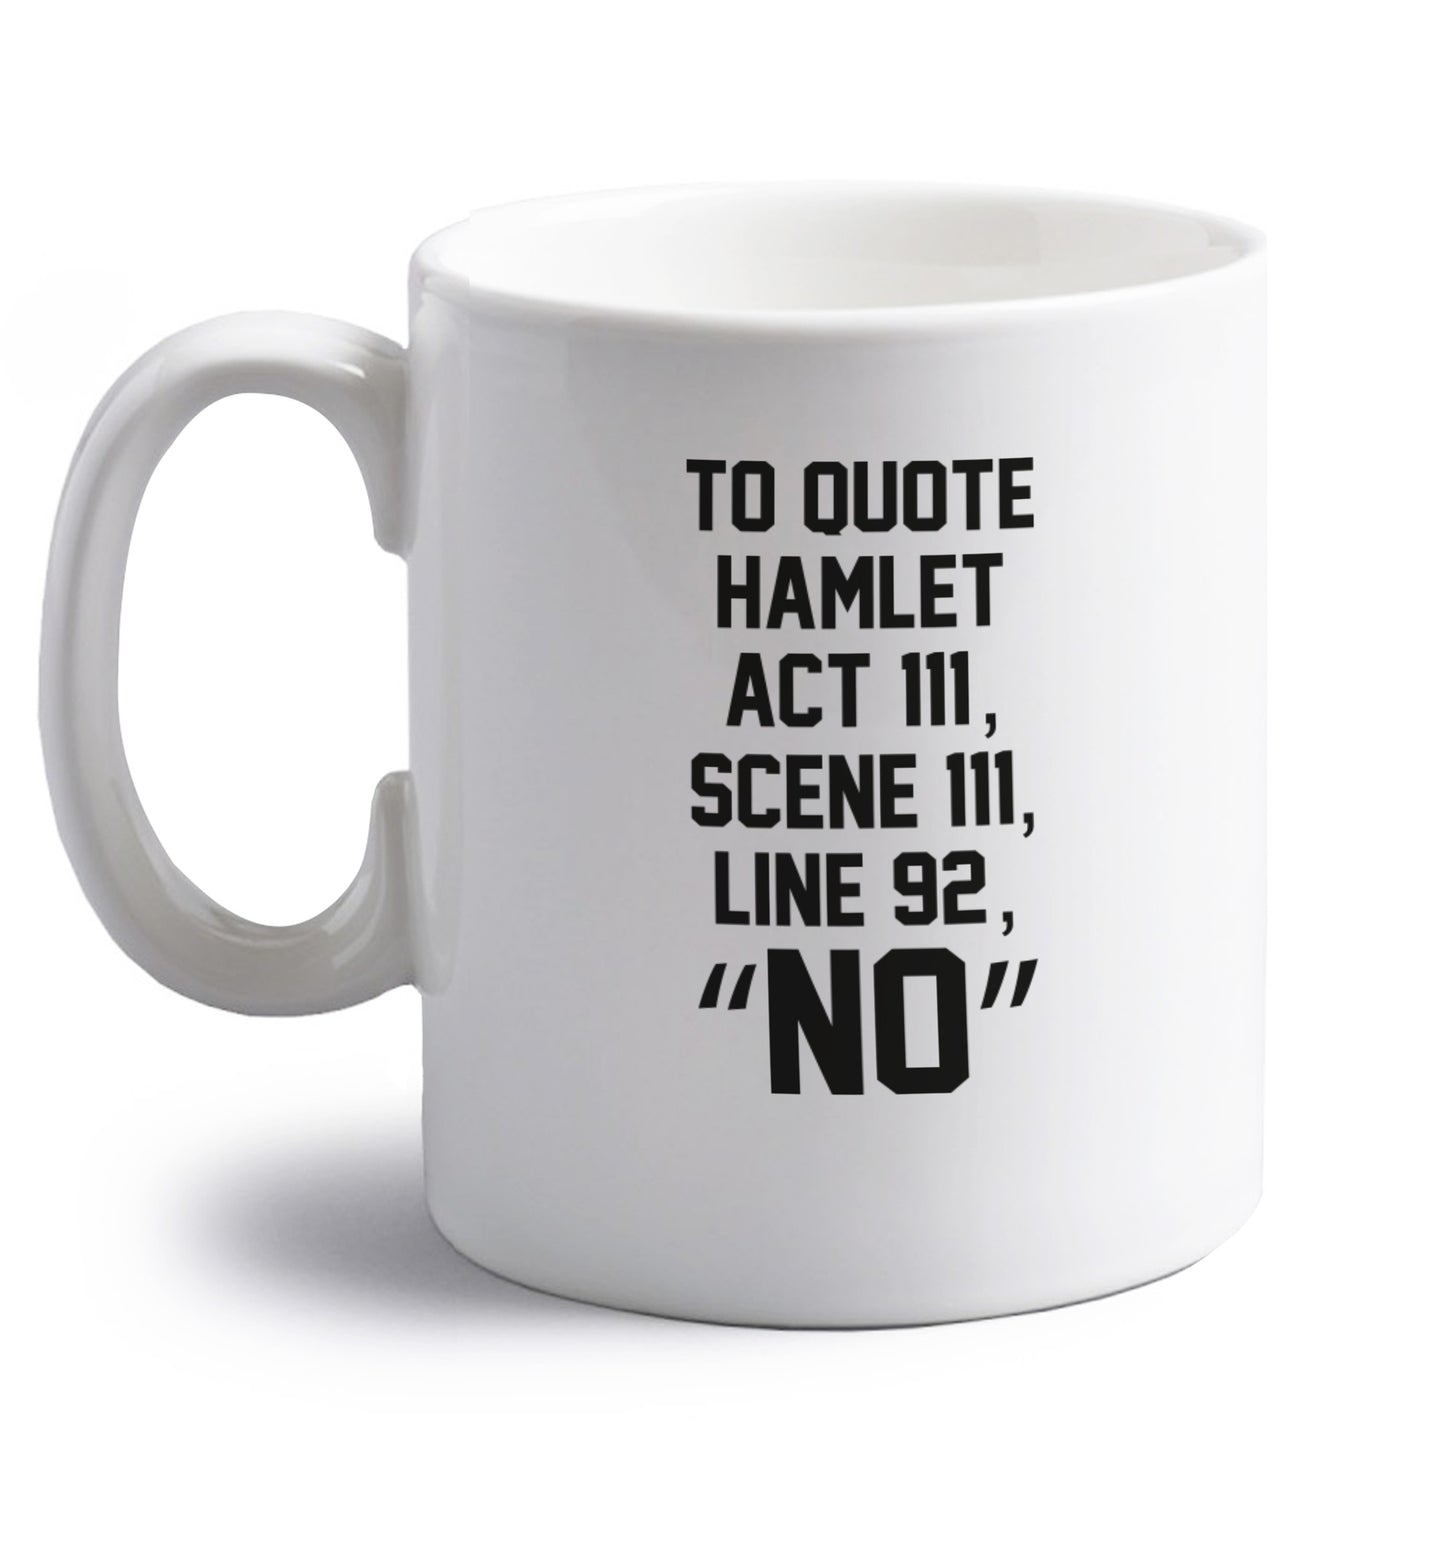 To quote hamlet act 3 scene 3 line 92 no right handed white ceramic mug 